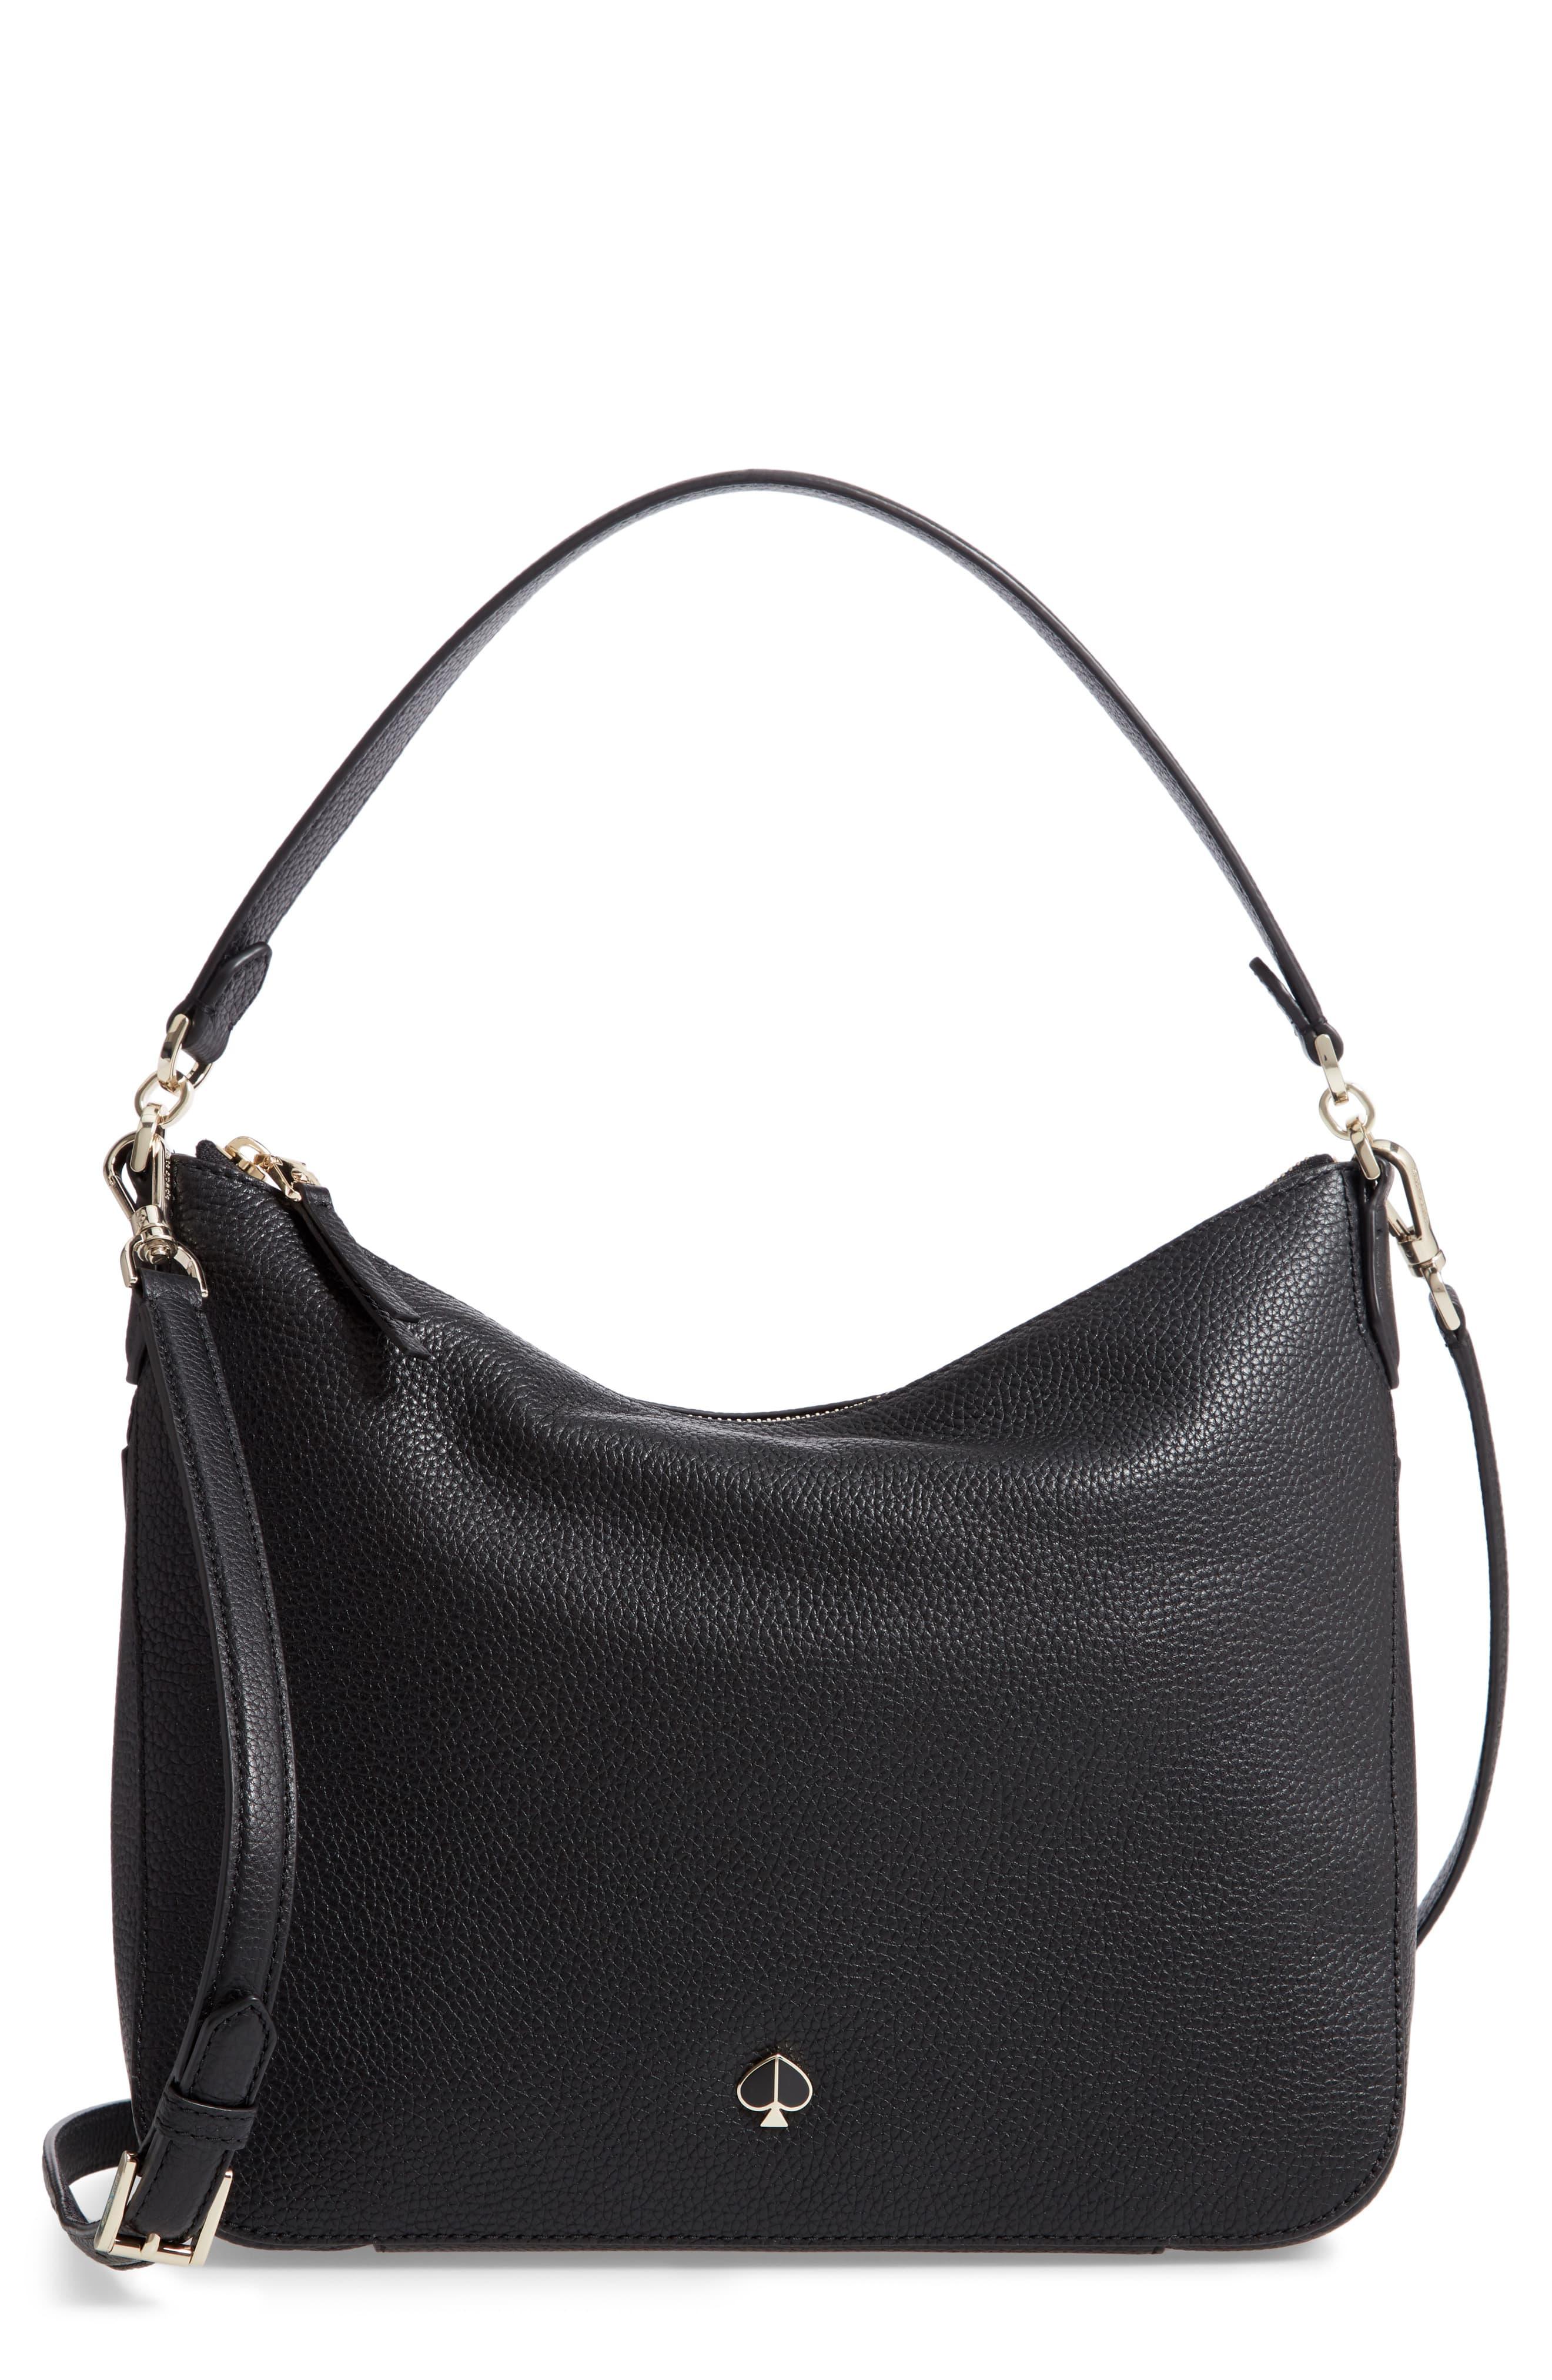 Kate Spade Medium Polly Leather Shoulder Bag in Black - Lyst